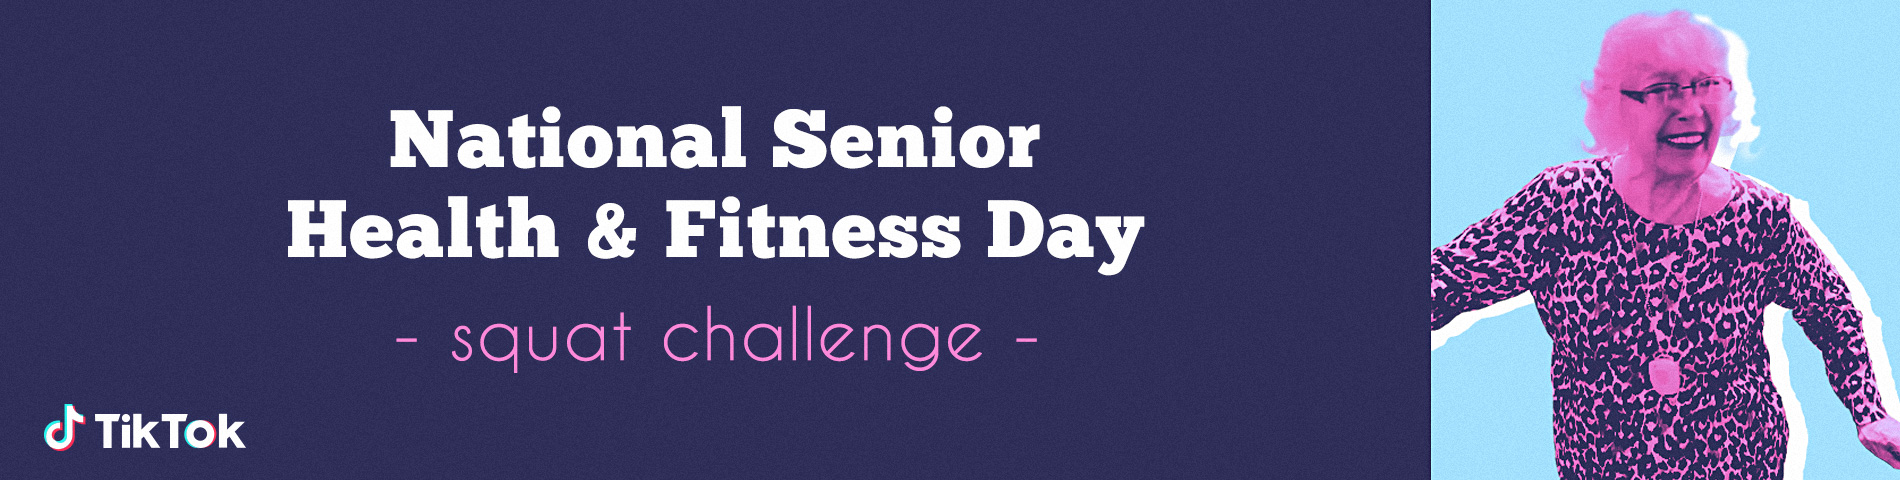 National Senior Health and Fitness Squat Challenge